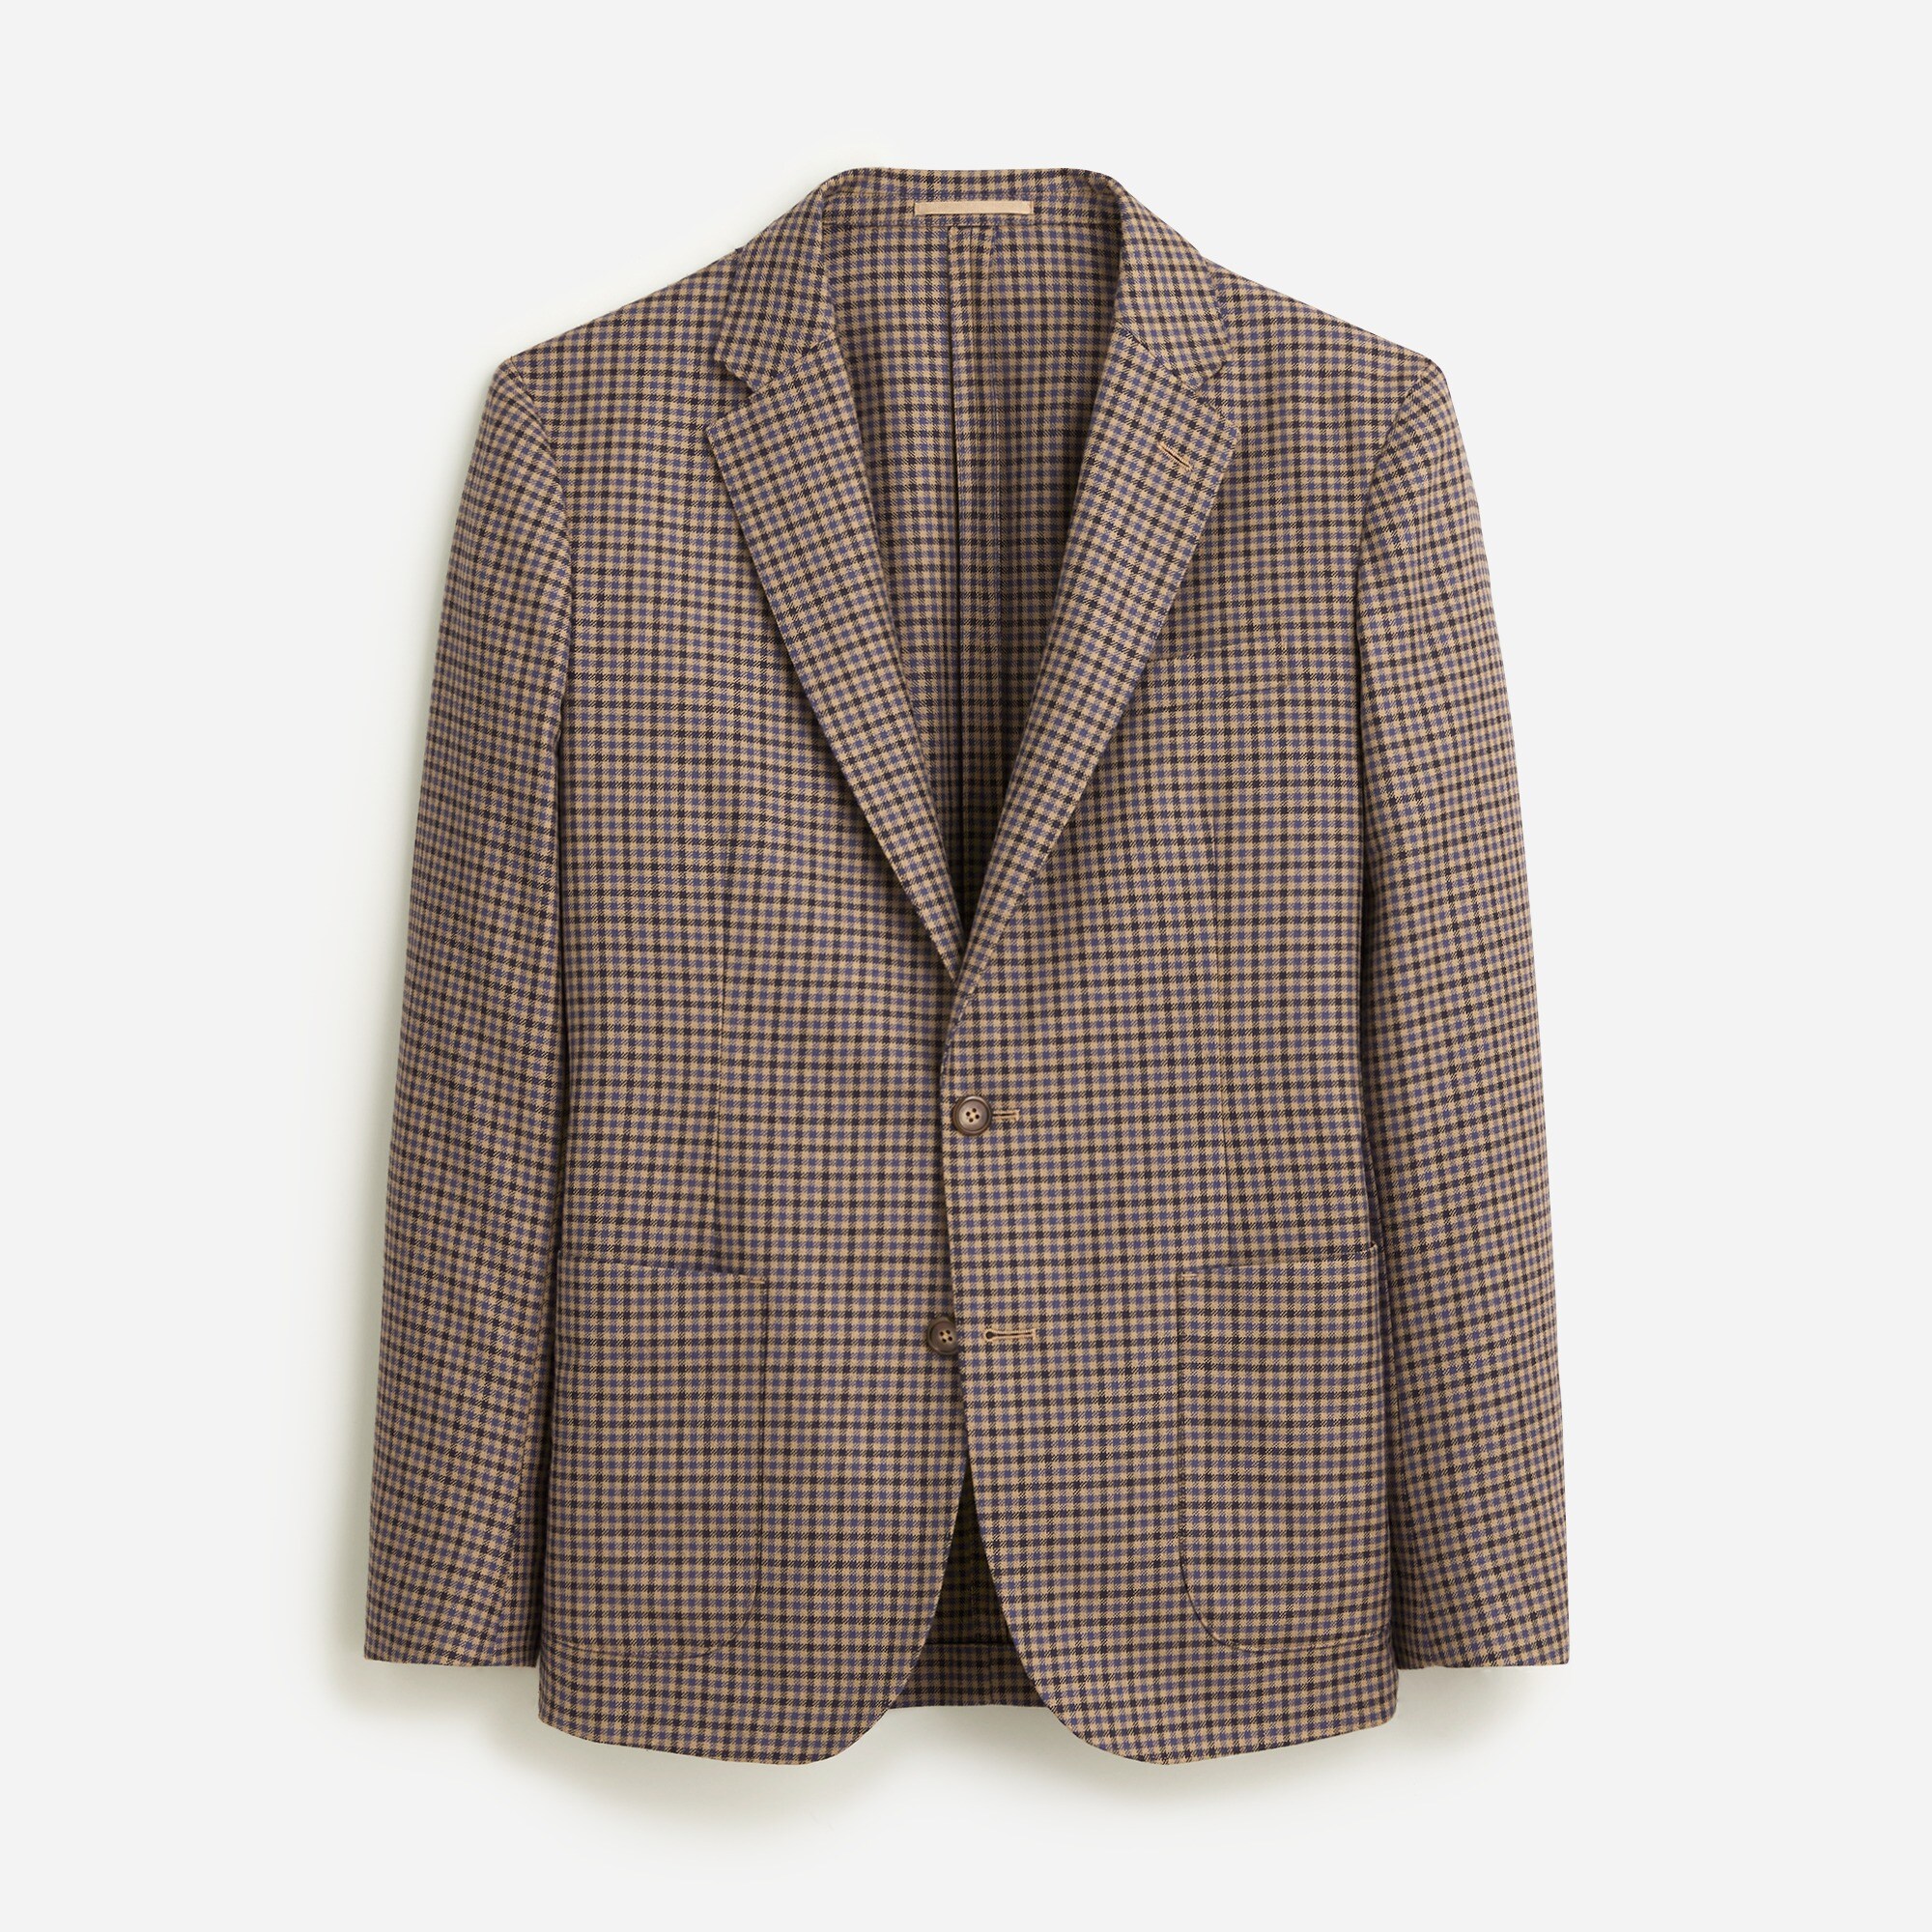  Ludlow Slim-fit blazer in English cotton-wool blend